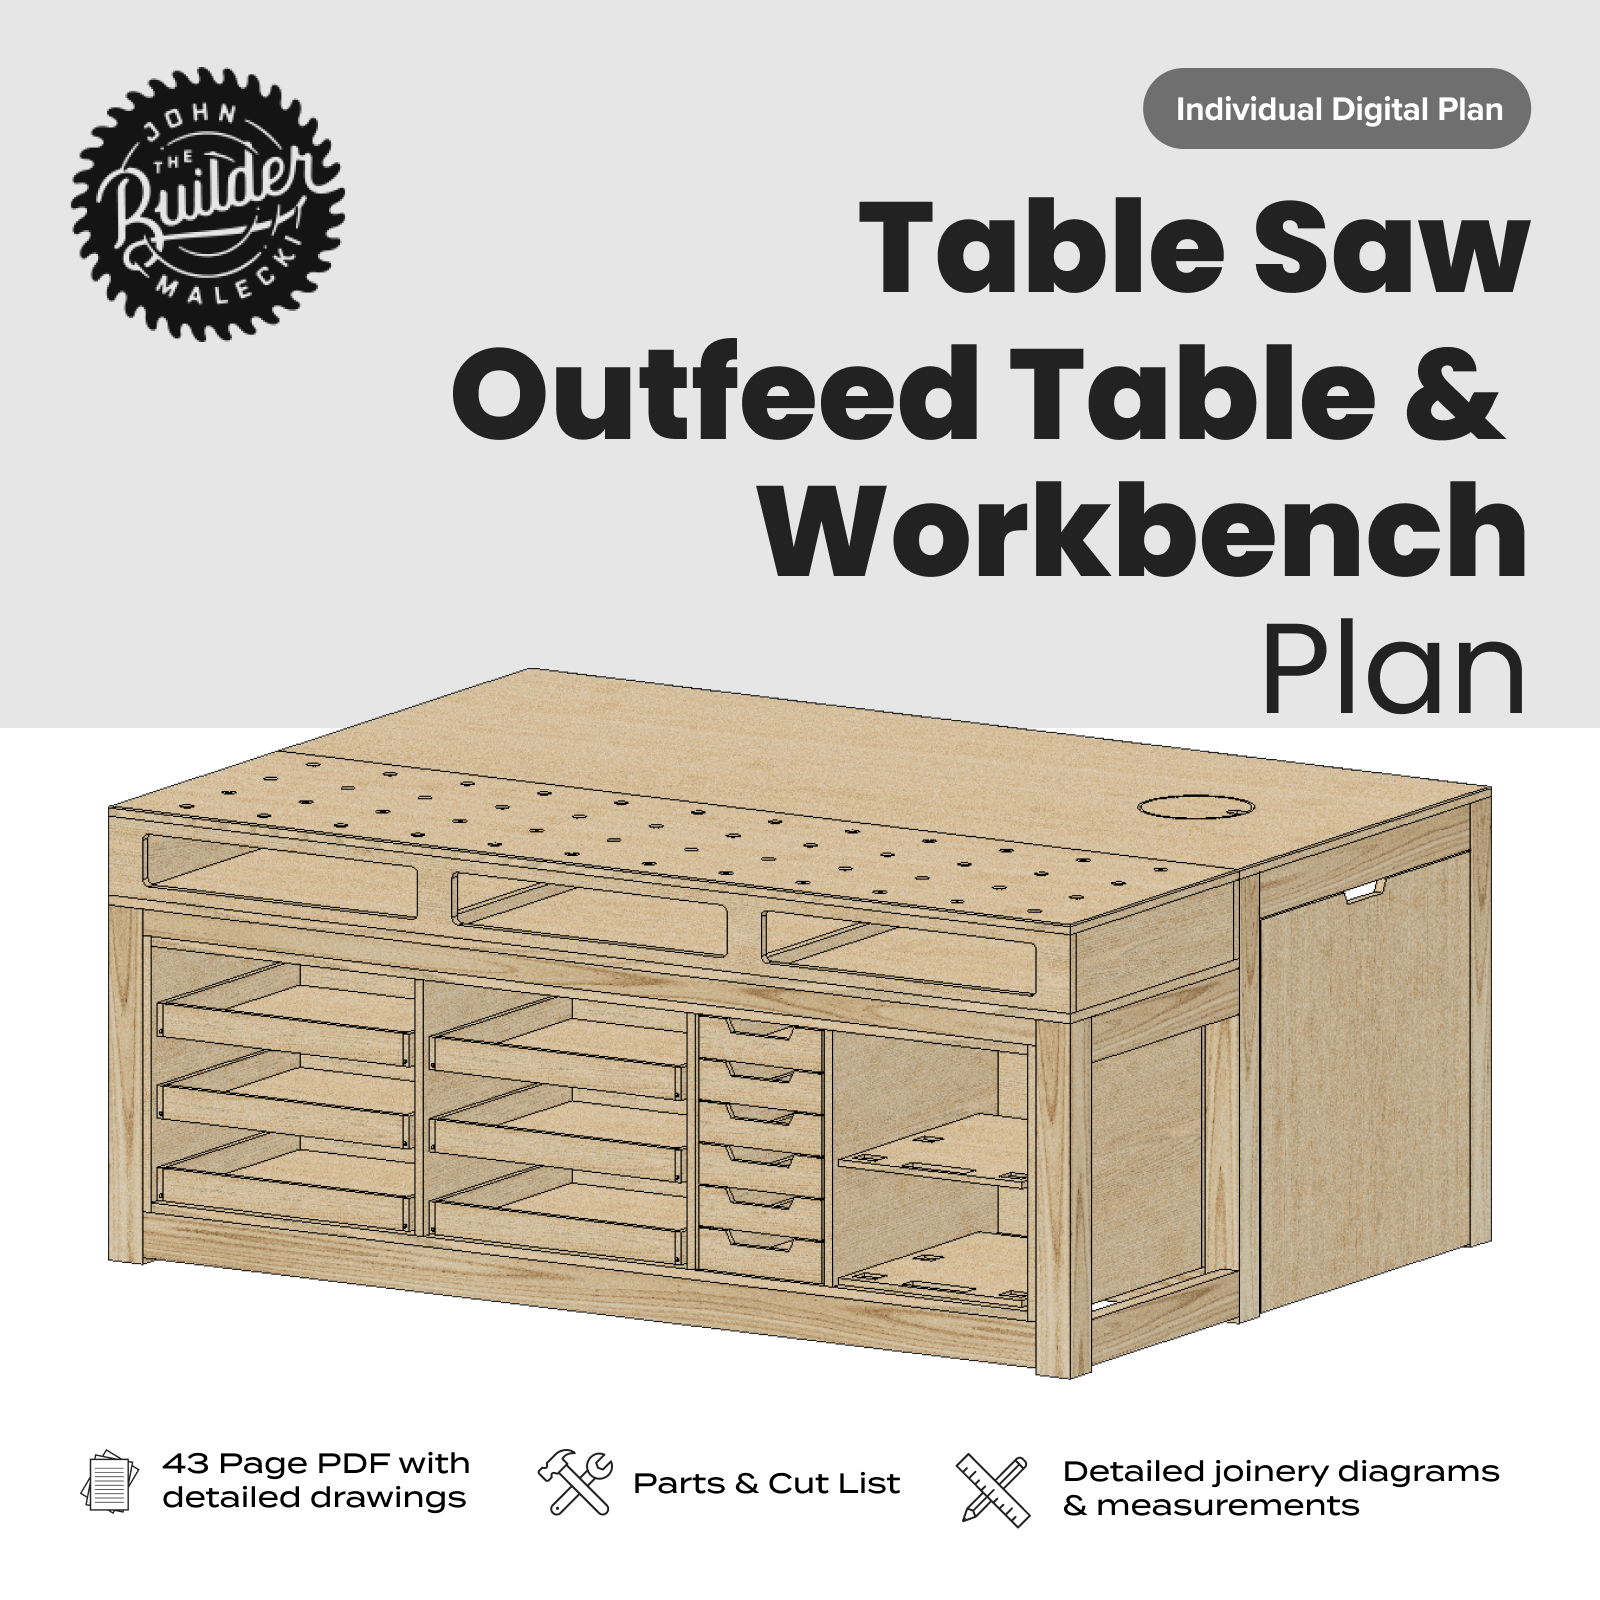 John Malecki - Table Saw Outfeed Table & Workbench Templates